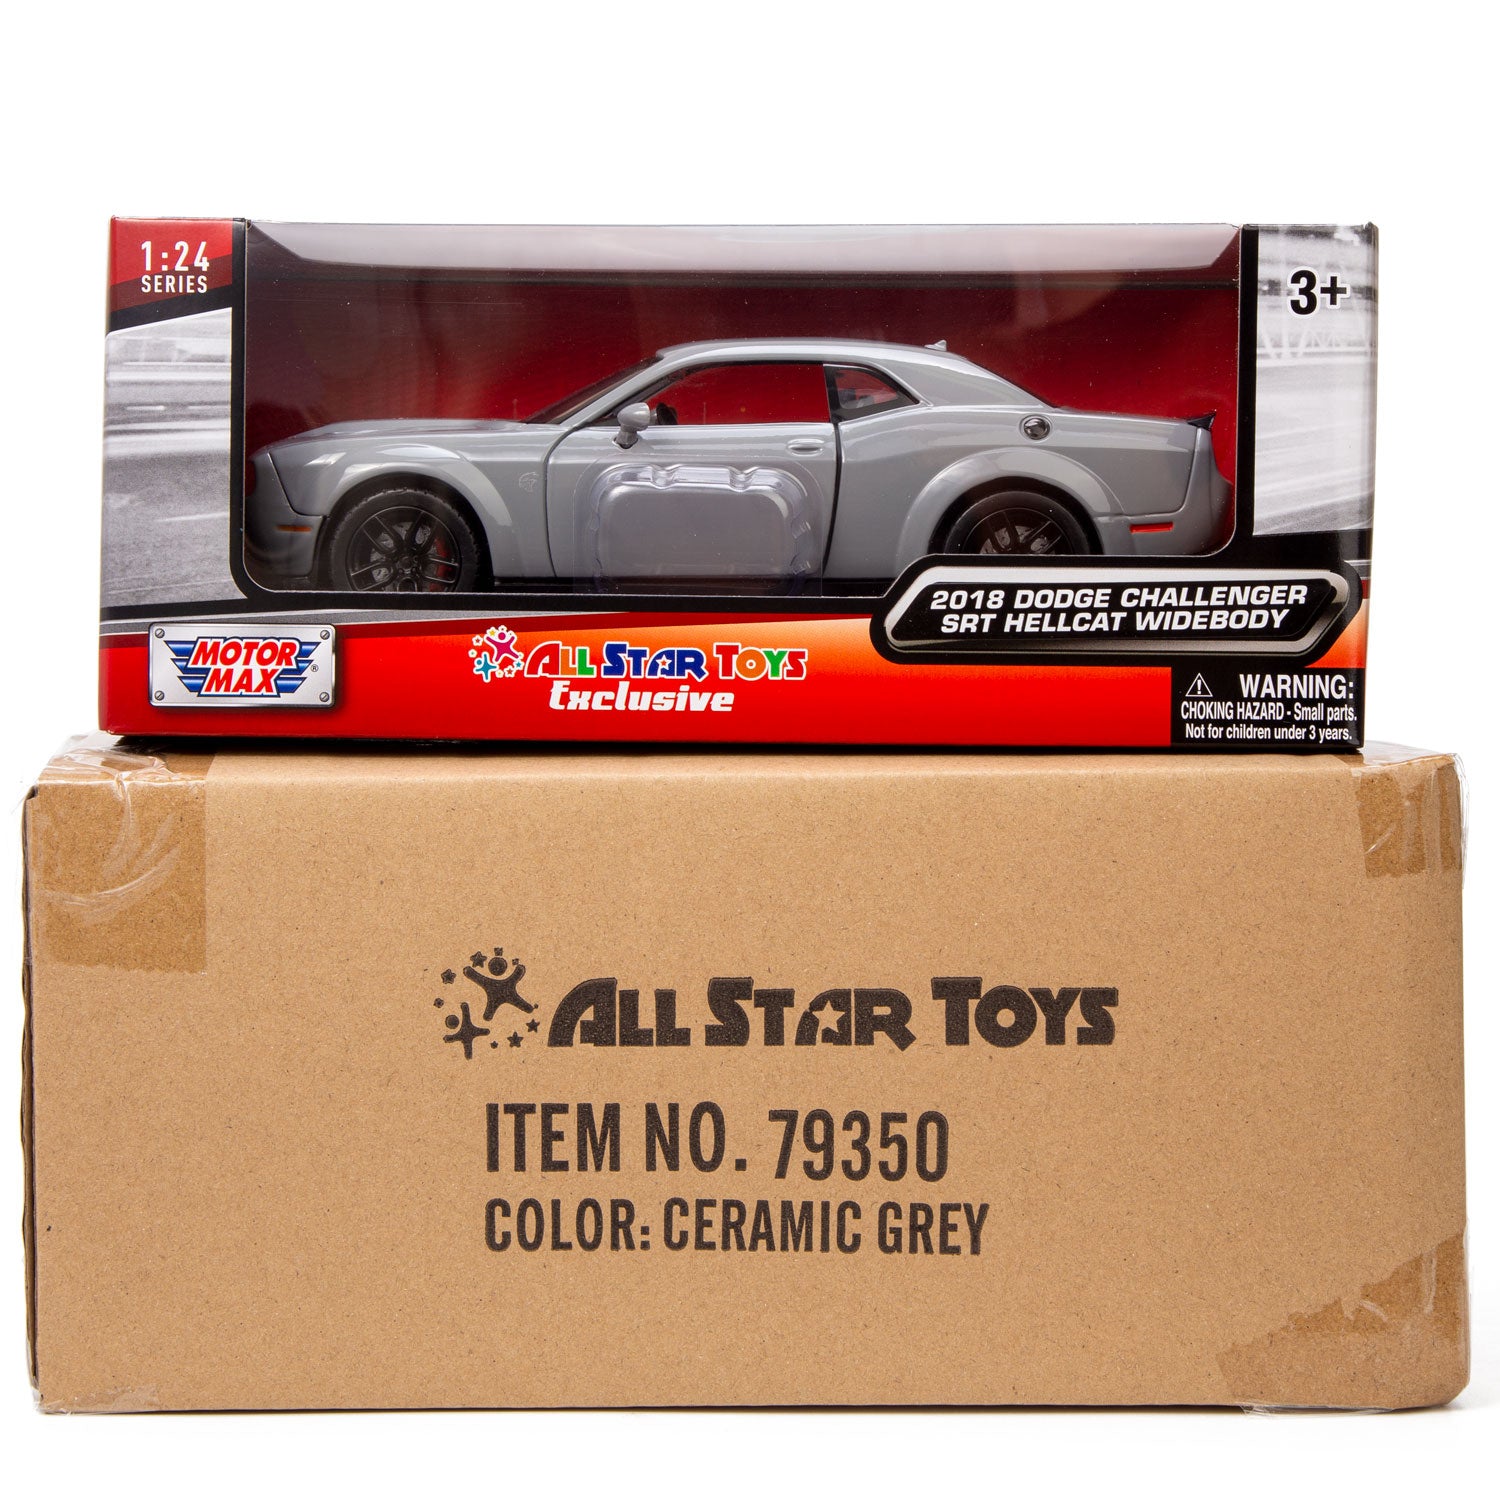 All Star Toys Exclusive 2018 Dodge Challenger SRT Hellcat Widebody Des